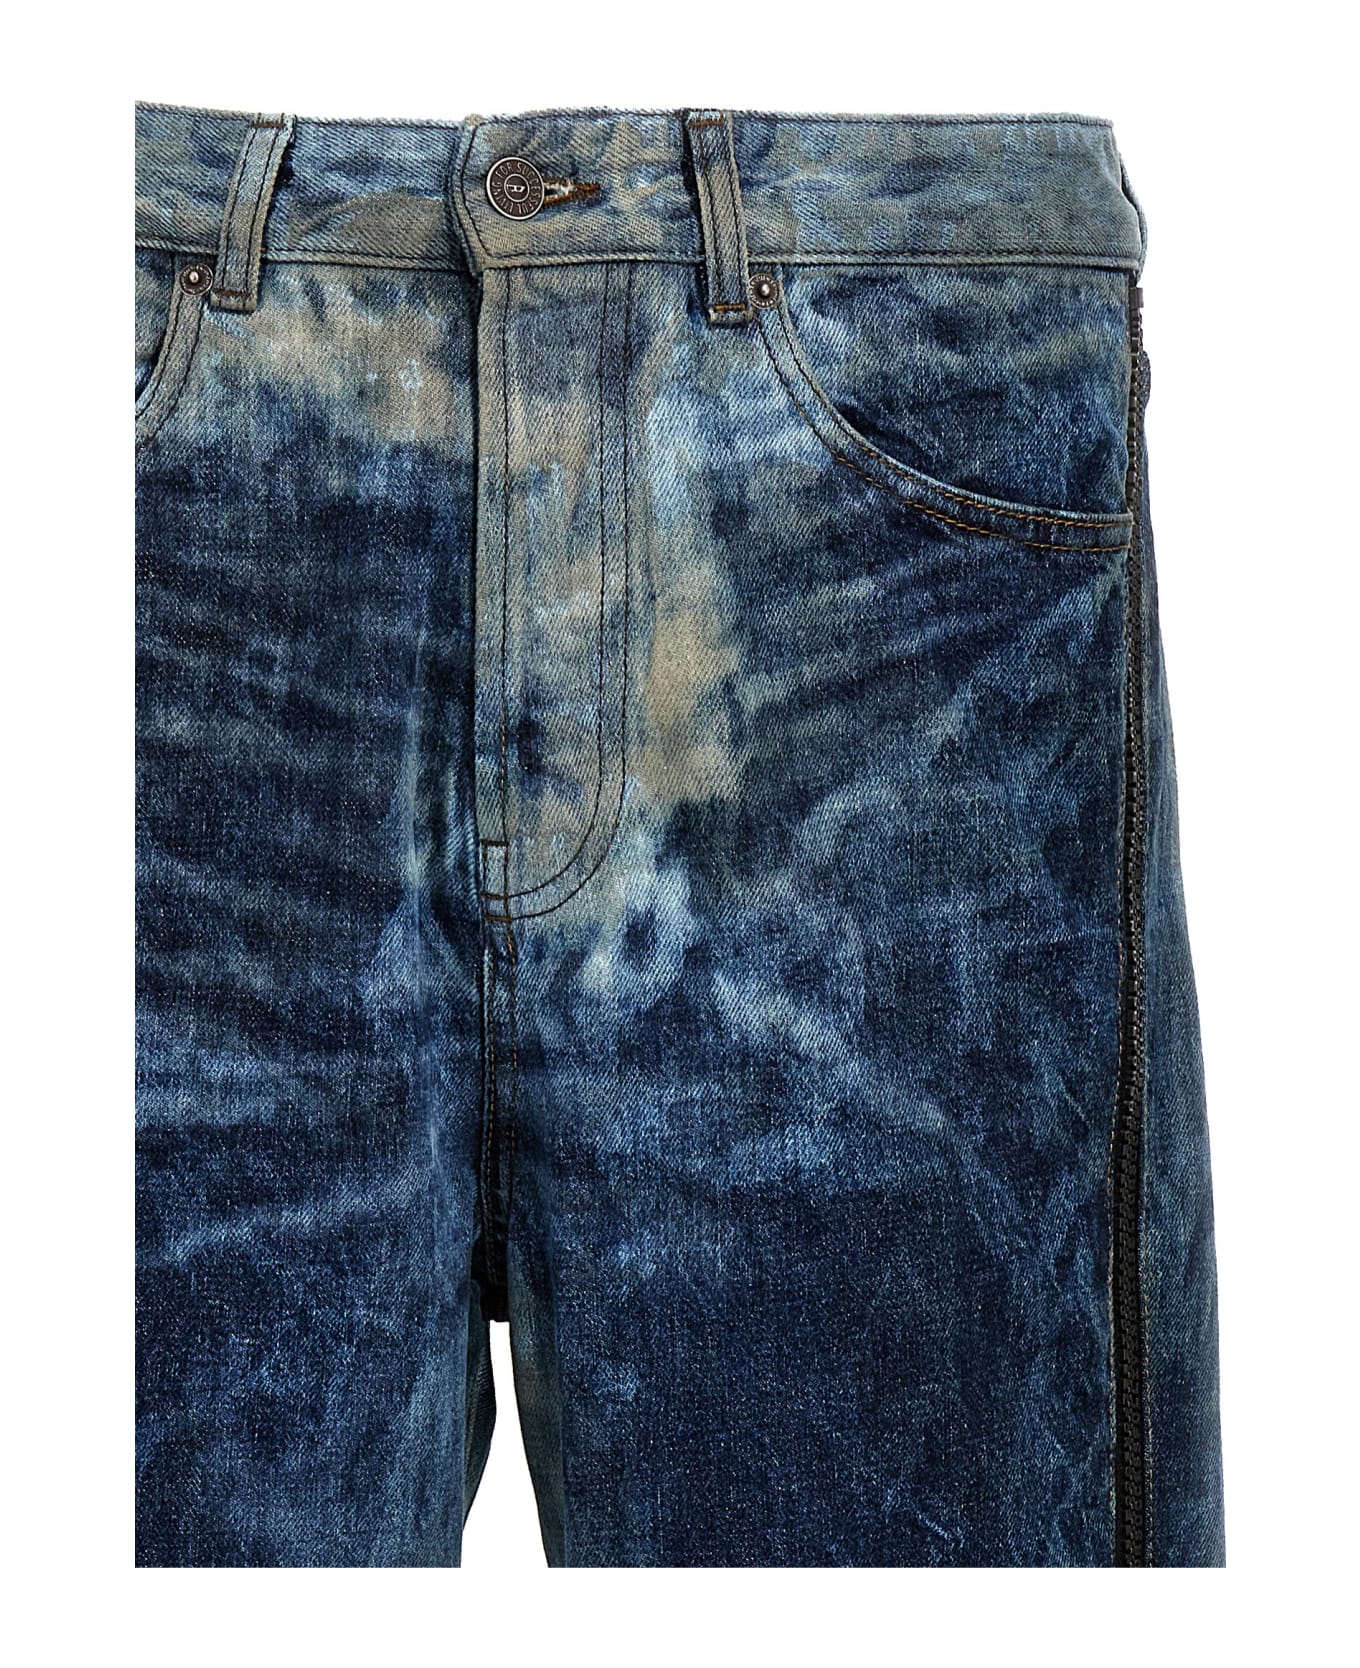 Diesel 'd-rise 0pgax' Jeans